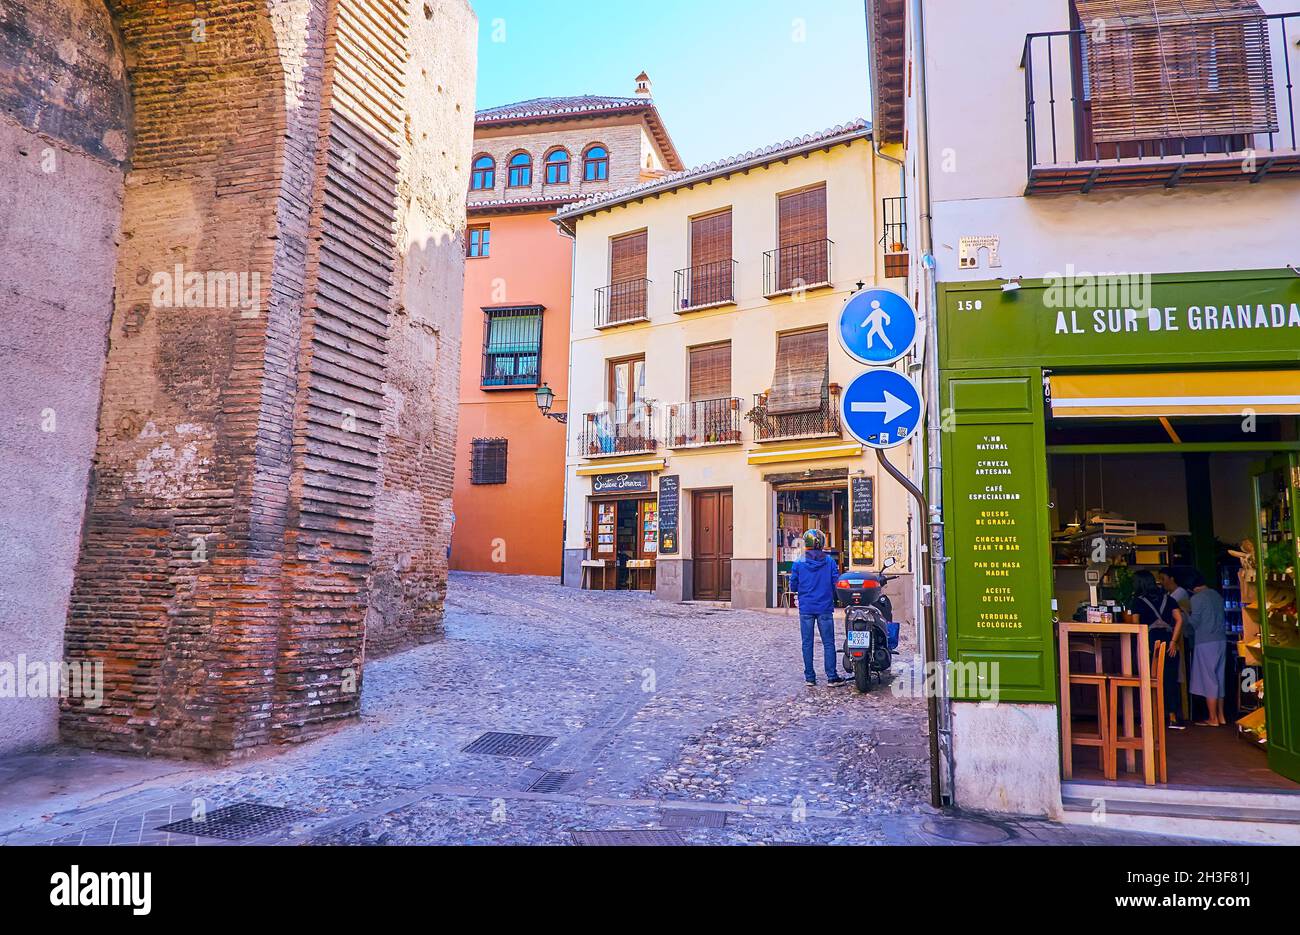 GRANADA, SPAIN - SEPT 27, 2019: The narrow curved Horno de la Merced street of Albaicin historic neighborhood with historic houses, cafes and wall of Stock Photo